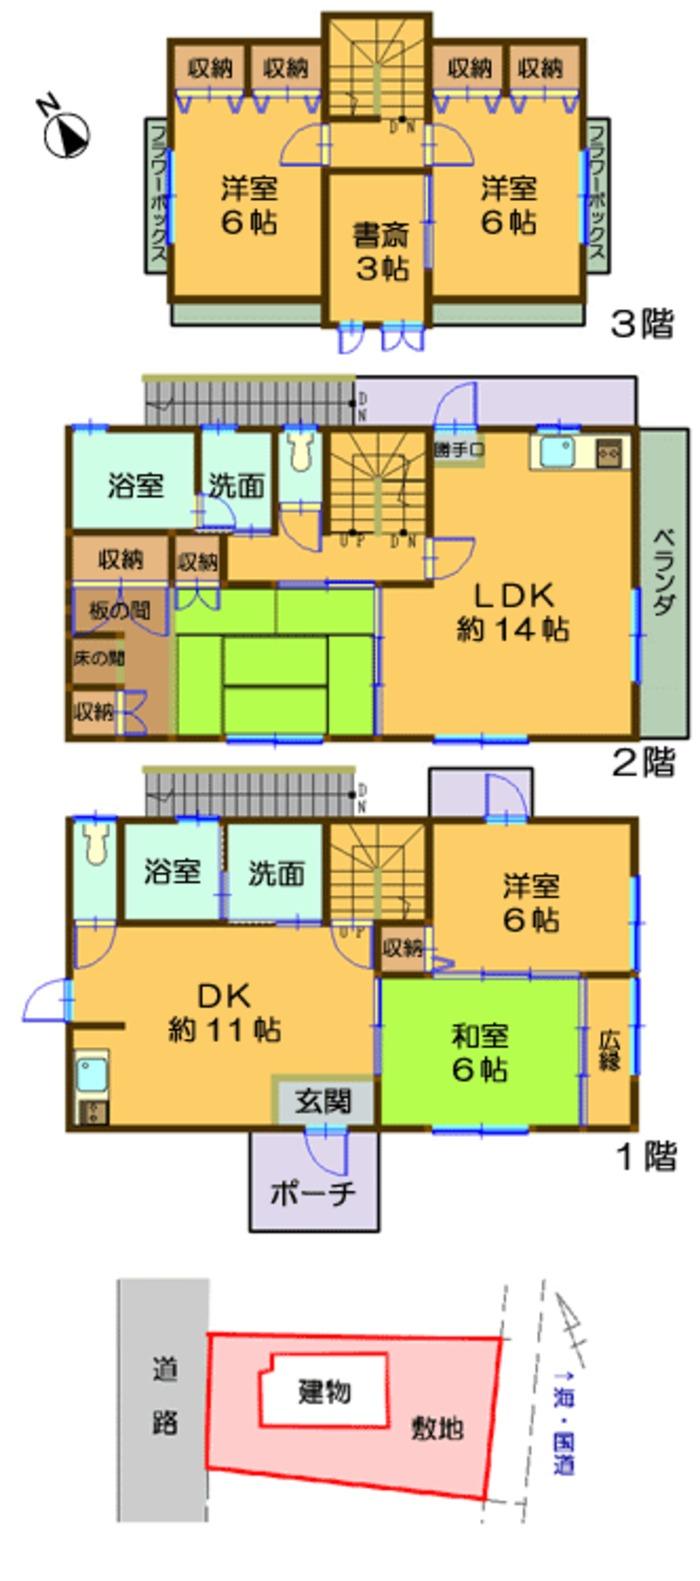 Floor plan. 28.5 million yen, 5LDDKK + S (storeroom), Land area 158.53 sq m , Building area 143.31 sq m